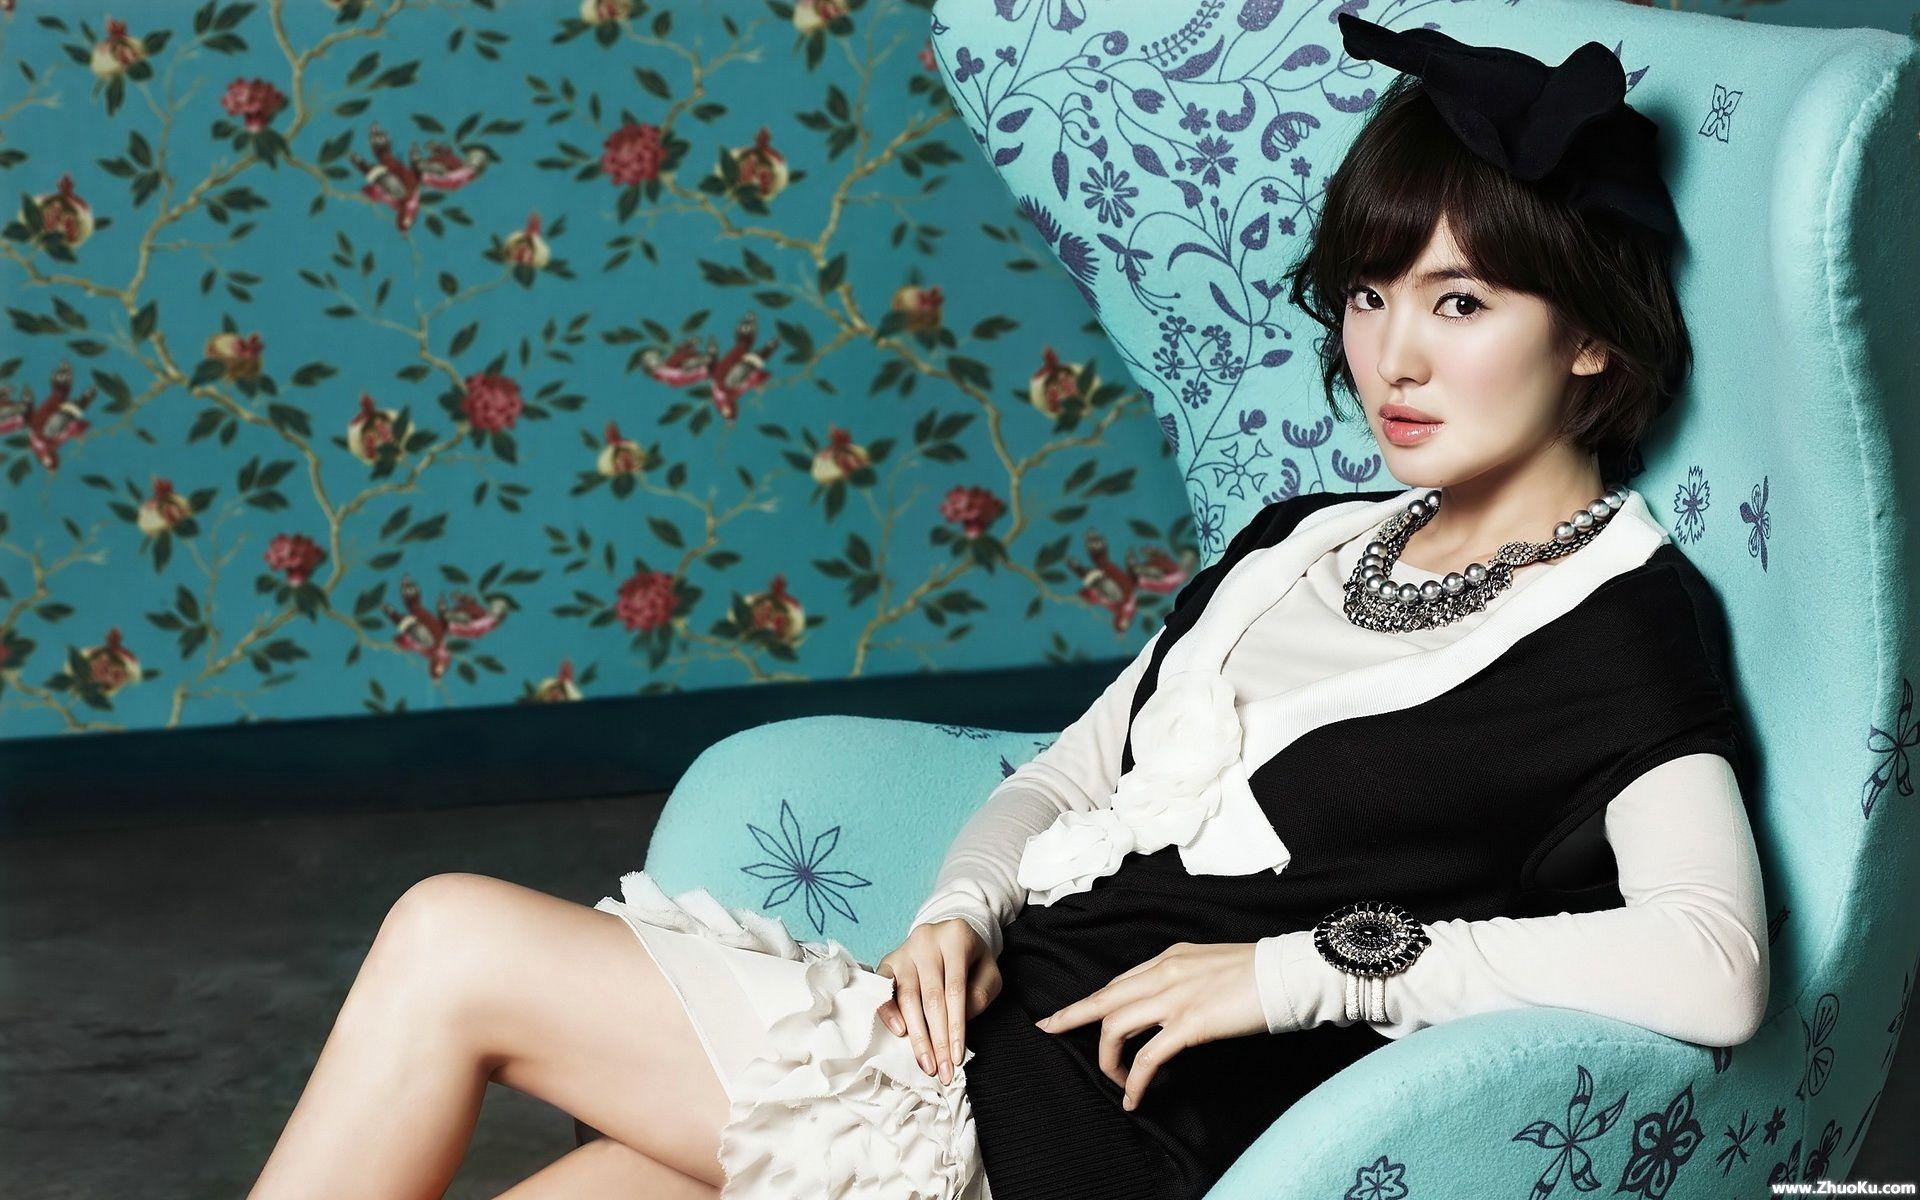 Actor Spotlight: Song Hye Kyo Highlights